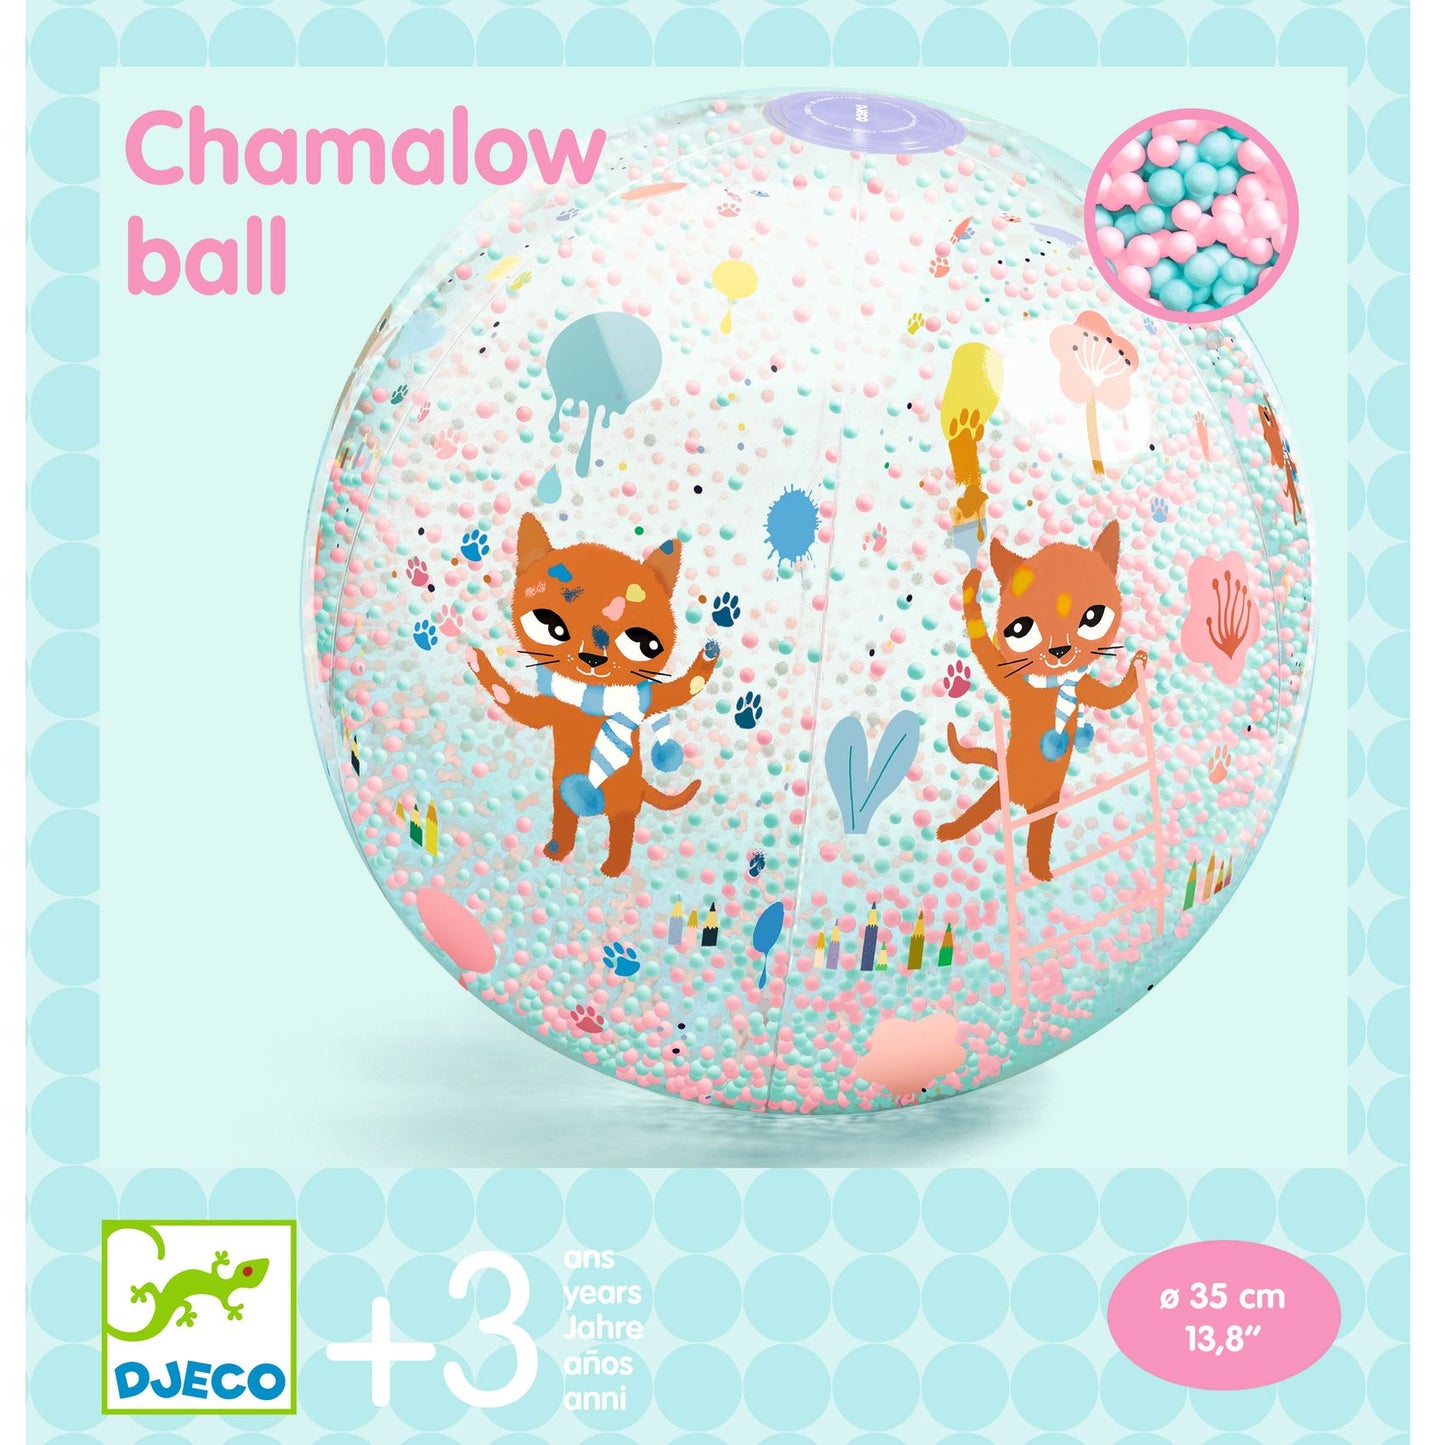 Chamalow ball - Palla gonfiabile con bolle